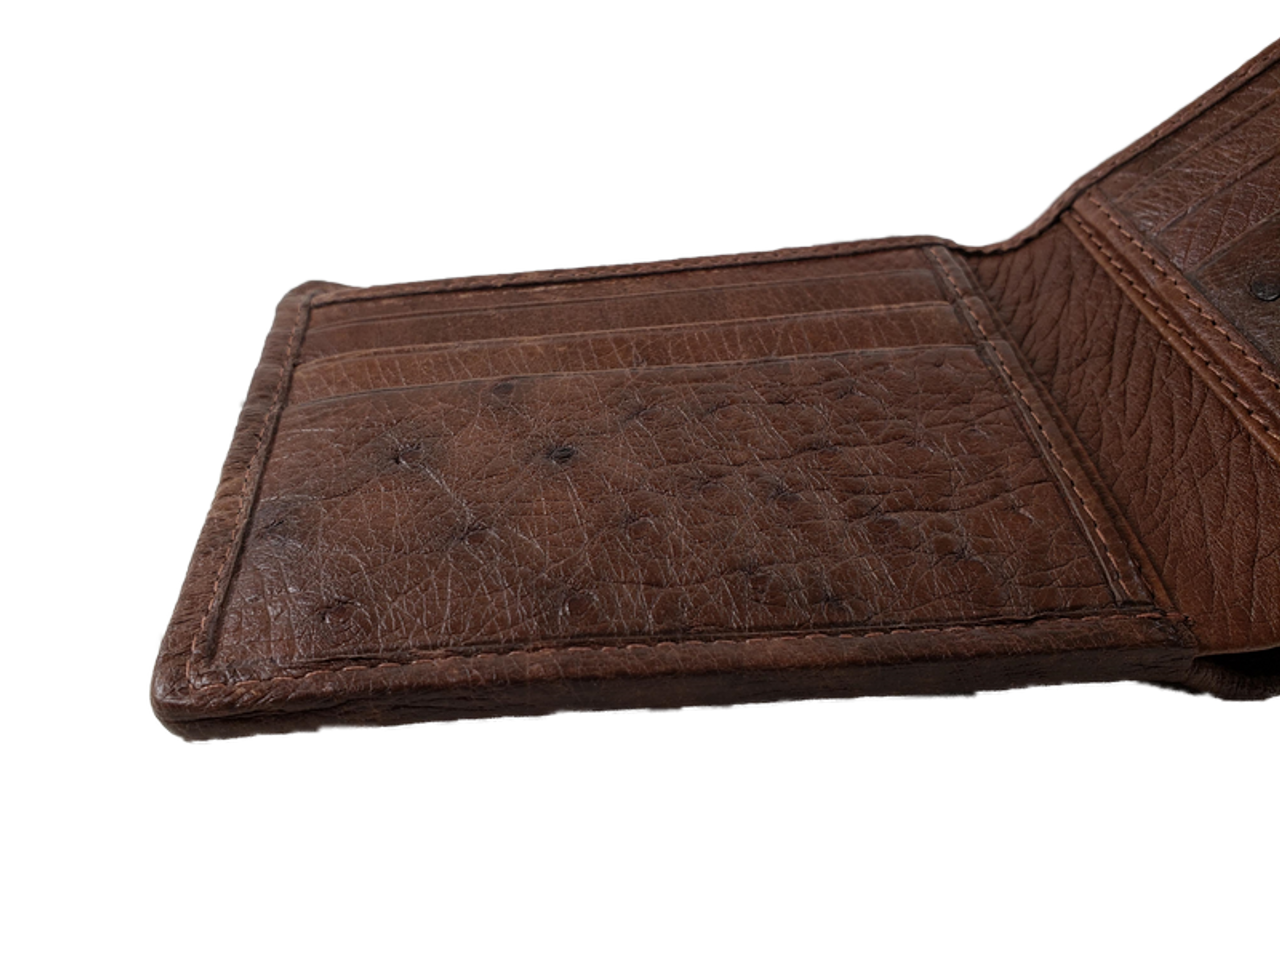 Genuine Ostrich Brown Bifold Billfold Wallet Leather Handmade in USA - Optional Personalized Monogram